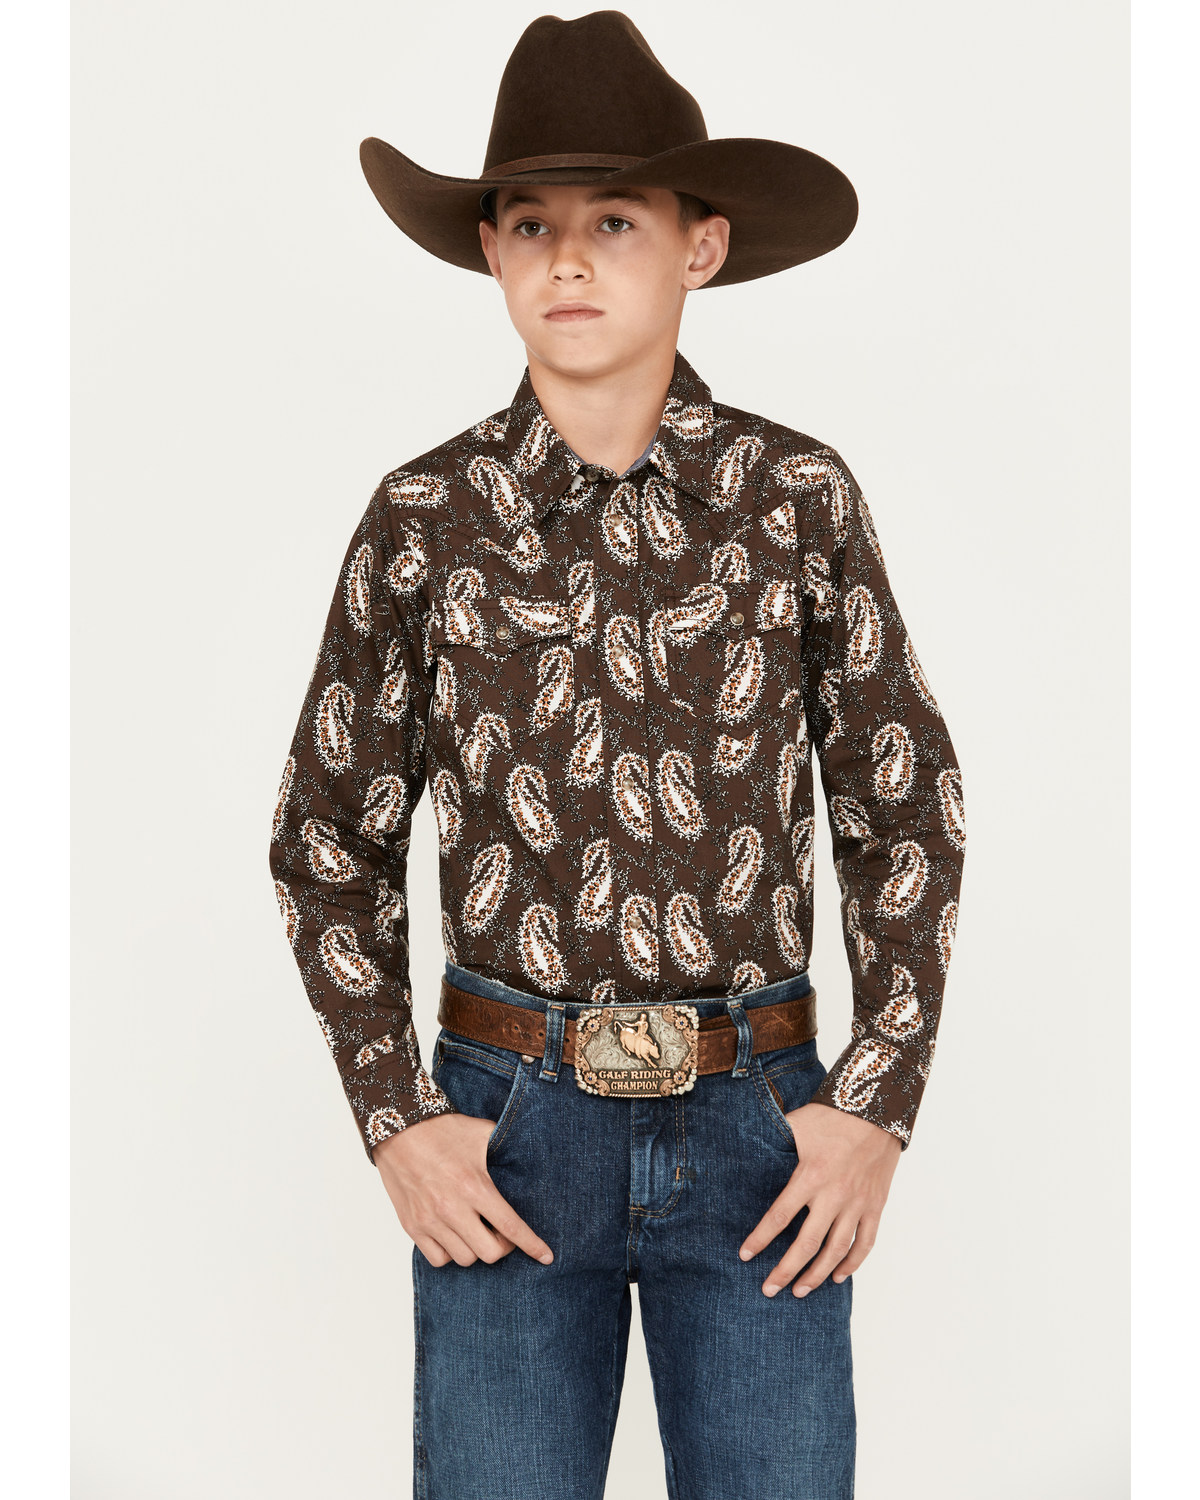 Cody James Boys' Flea Market Paisley Print Long Sleeve Snap Western Shirt